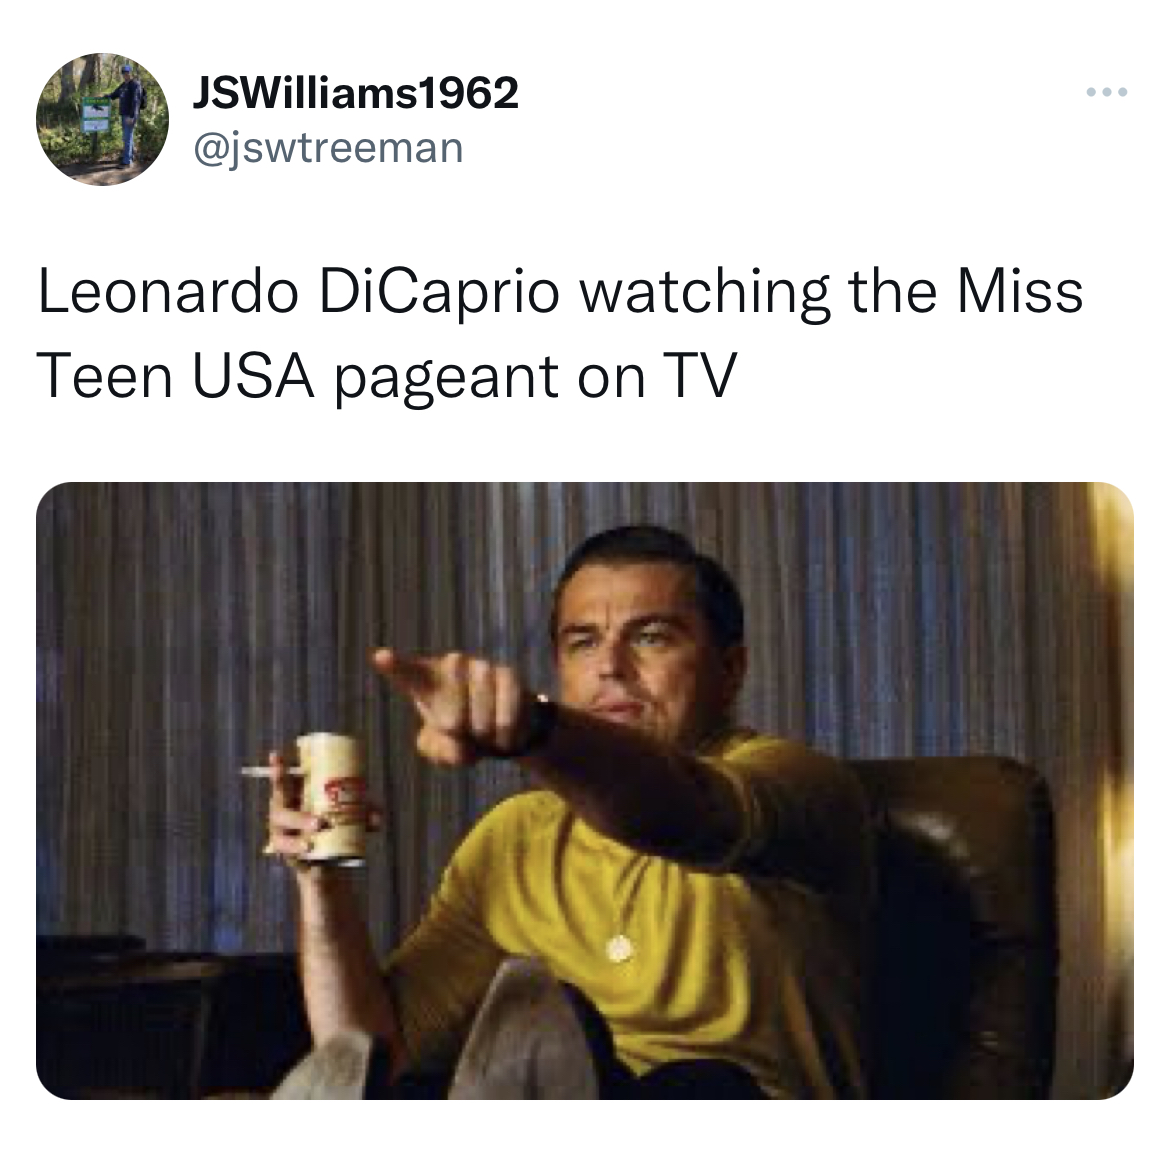 Leonardo DiCaprio Girlfriend Memes - human behavior - JSWilliams1962 Leonardo DiCaprio watching the Miss Teen Usa pageant on Tv